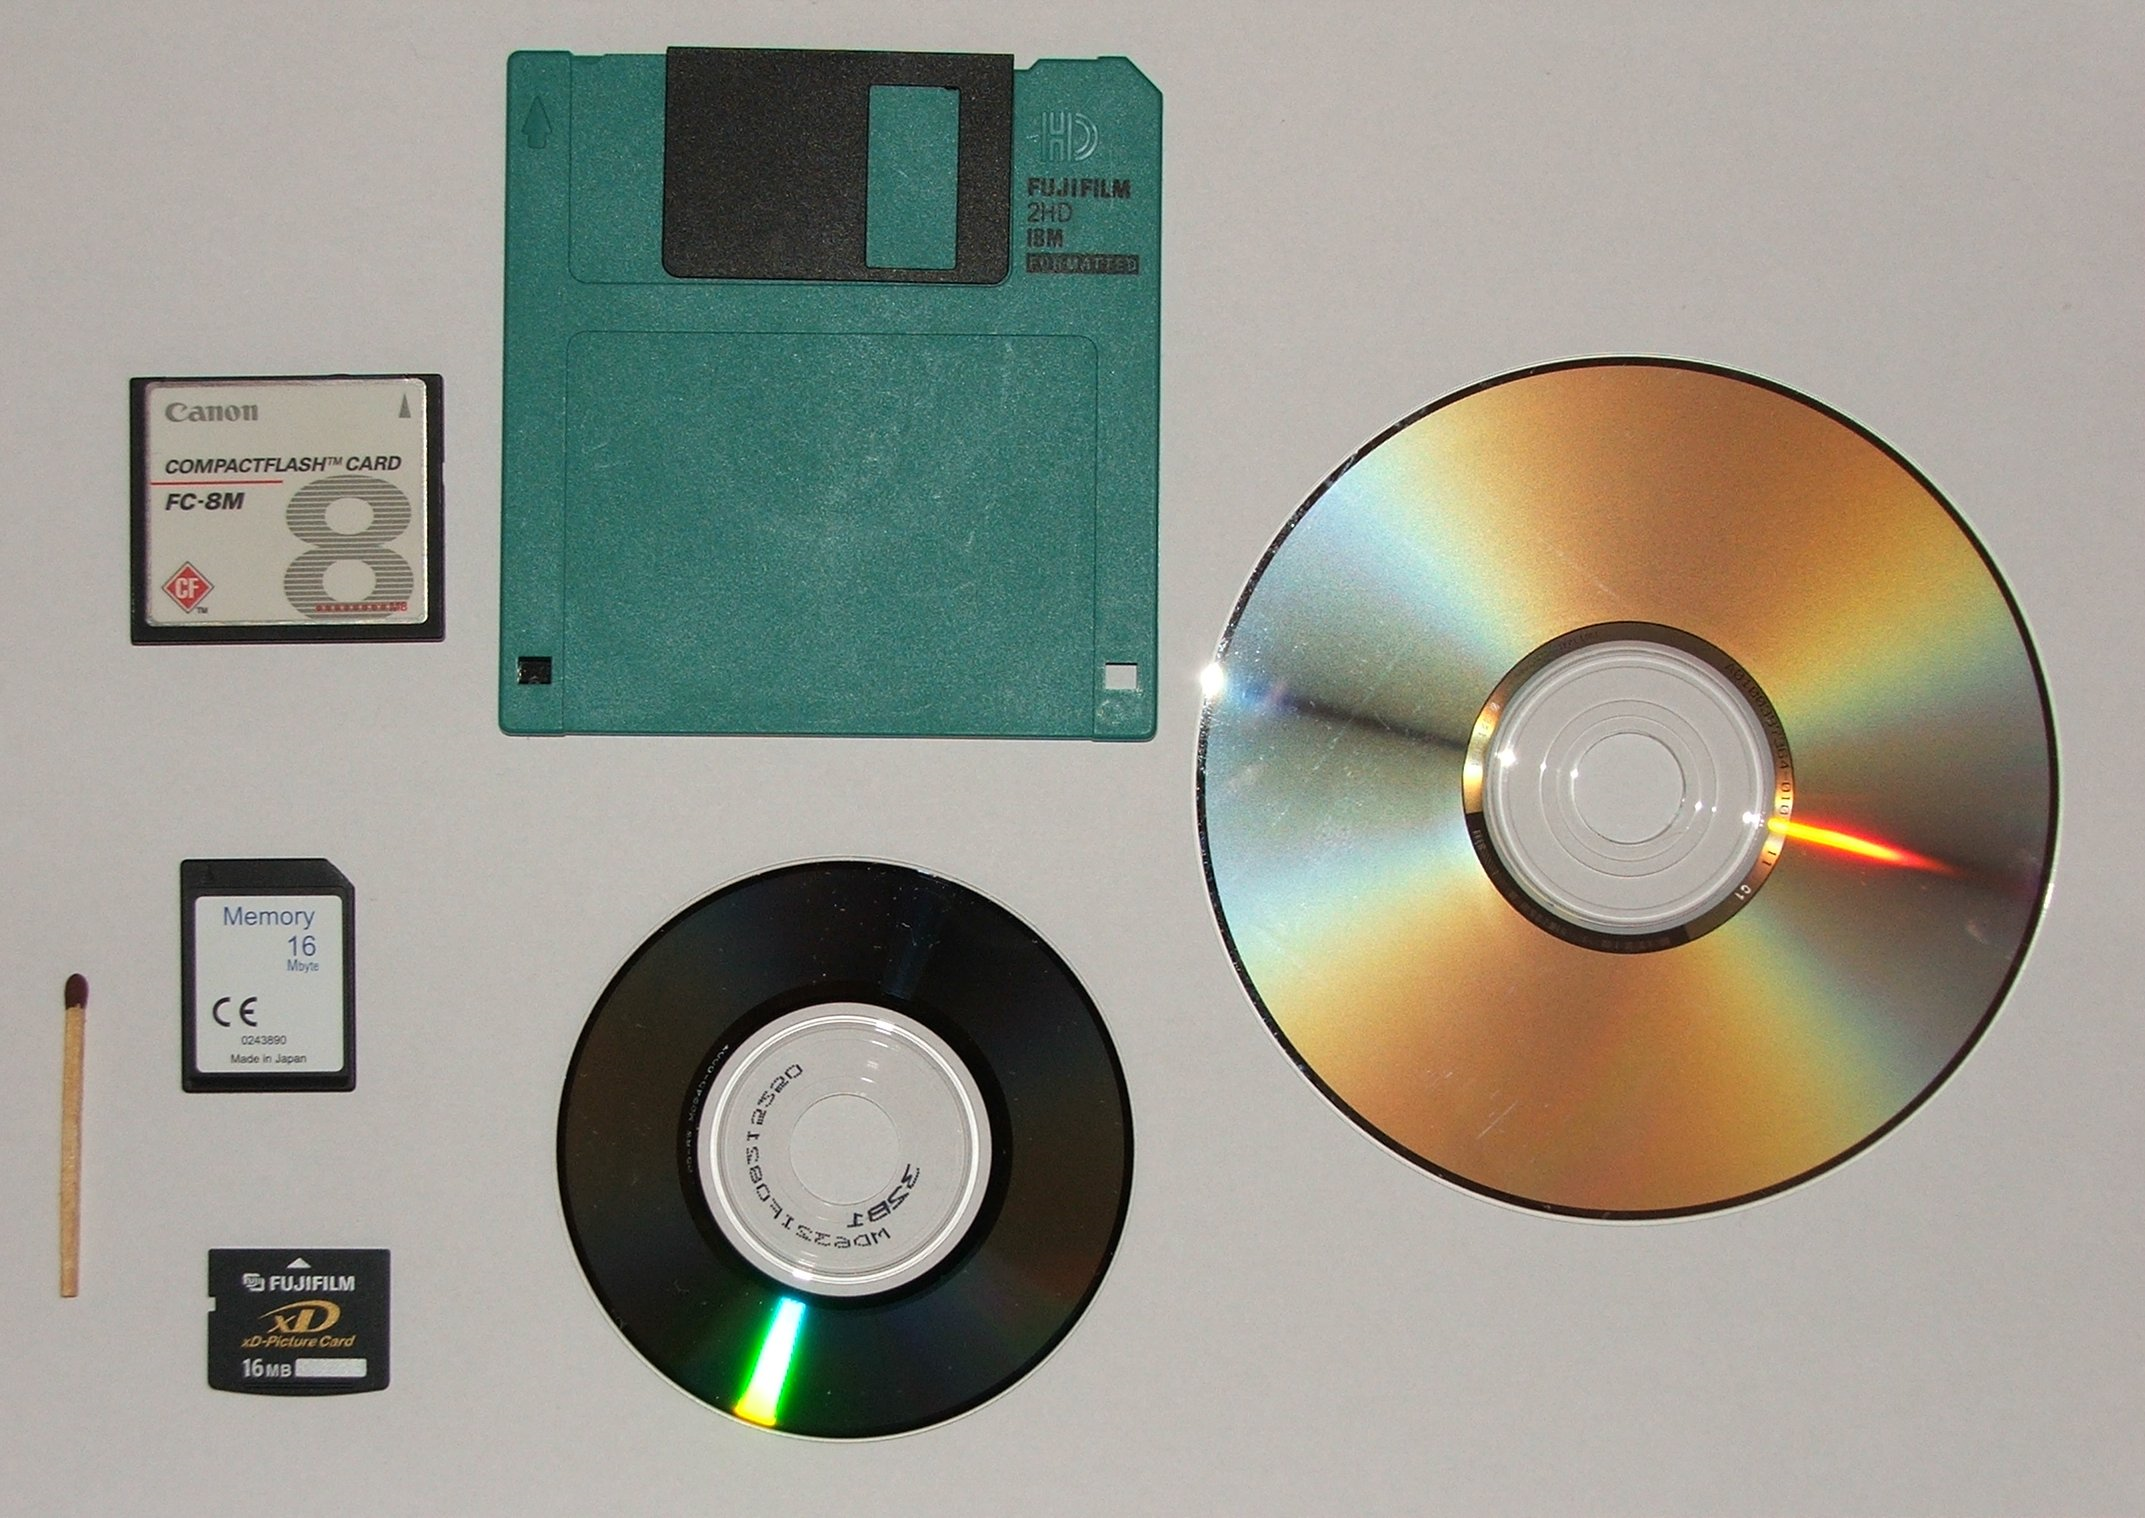 Сходство и различие дискеты и жесткого диска. Магнитные носители. Магнитные носители информации. Магнитные диски. Диски и дискеты.